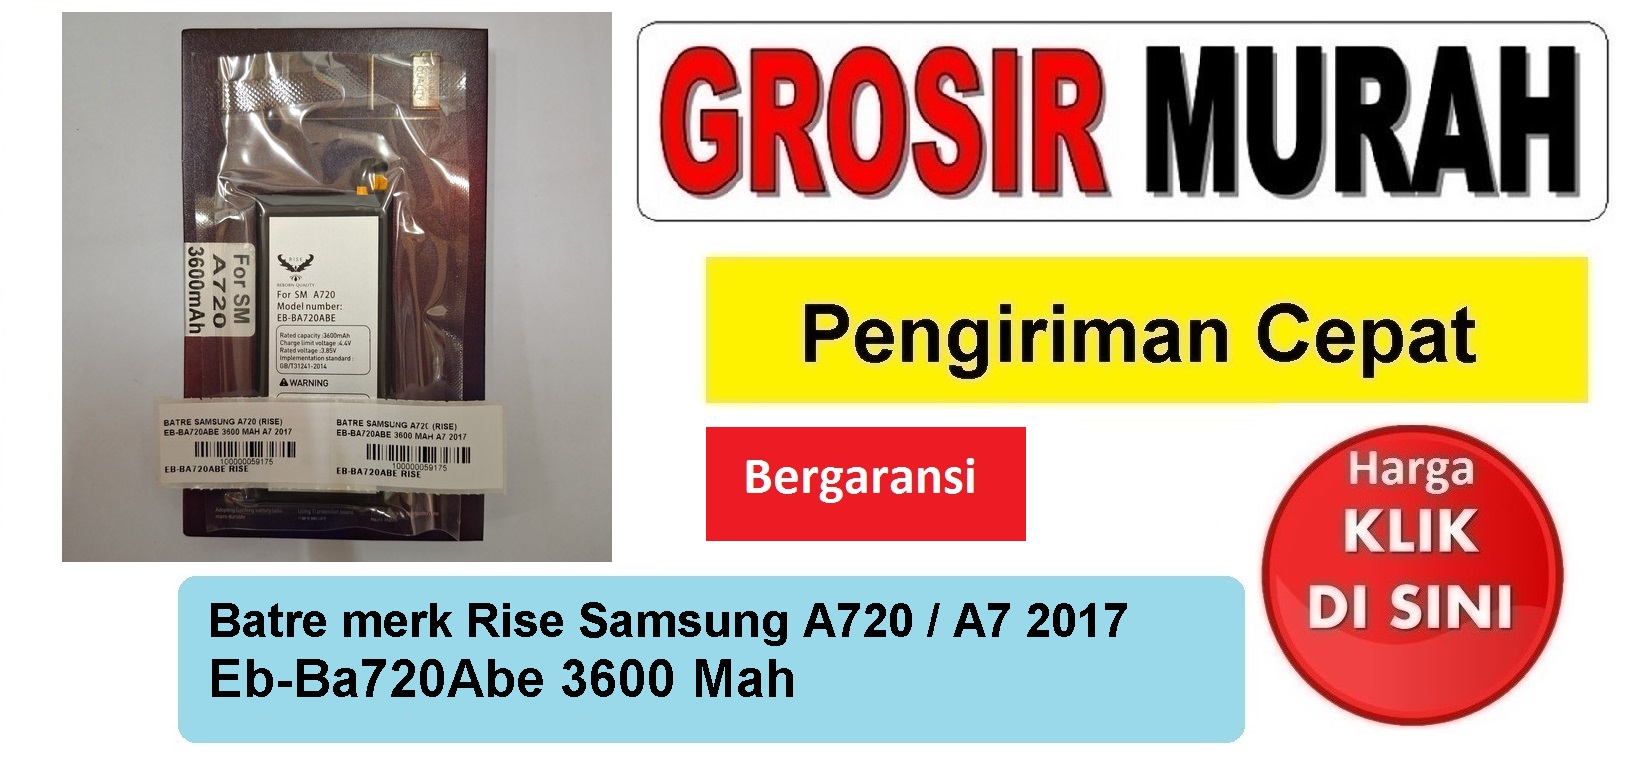 Batre merk Rise Samsung A720 Eb-Ba720Abe 3600 Mah A7 2017 Baterai Battery Bergaransi Batere